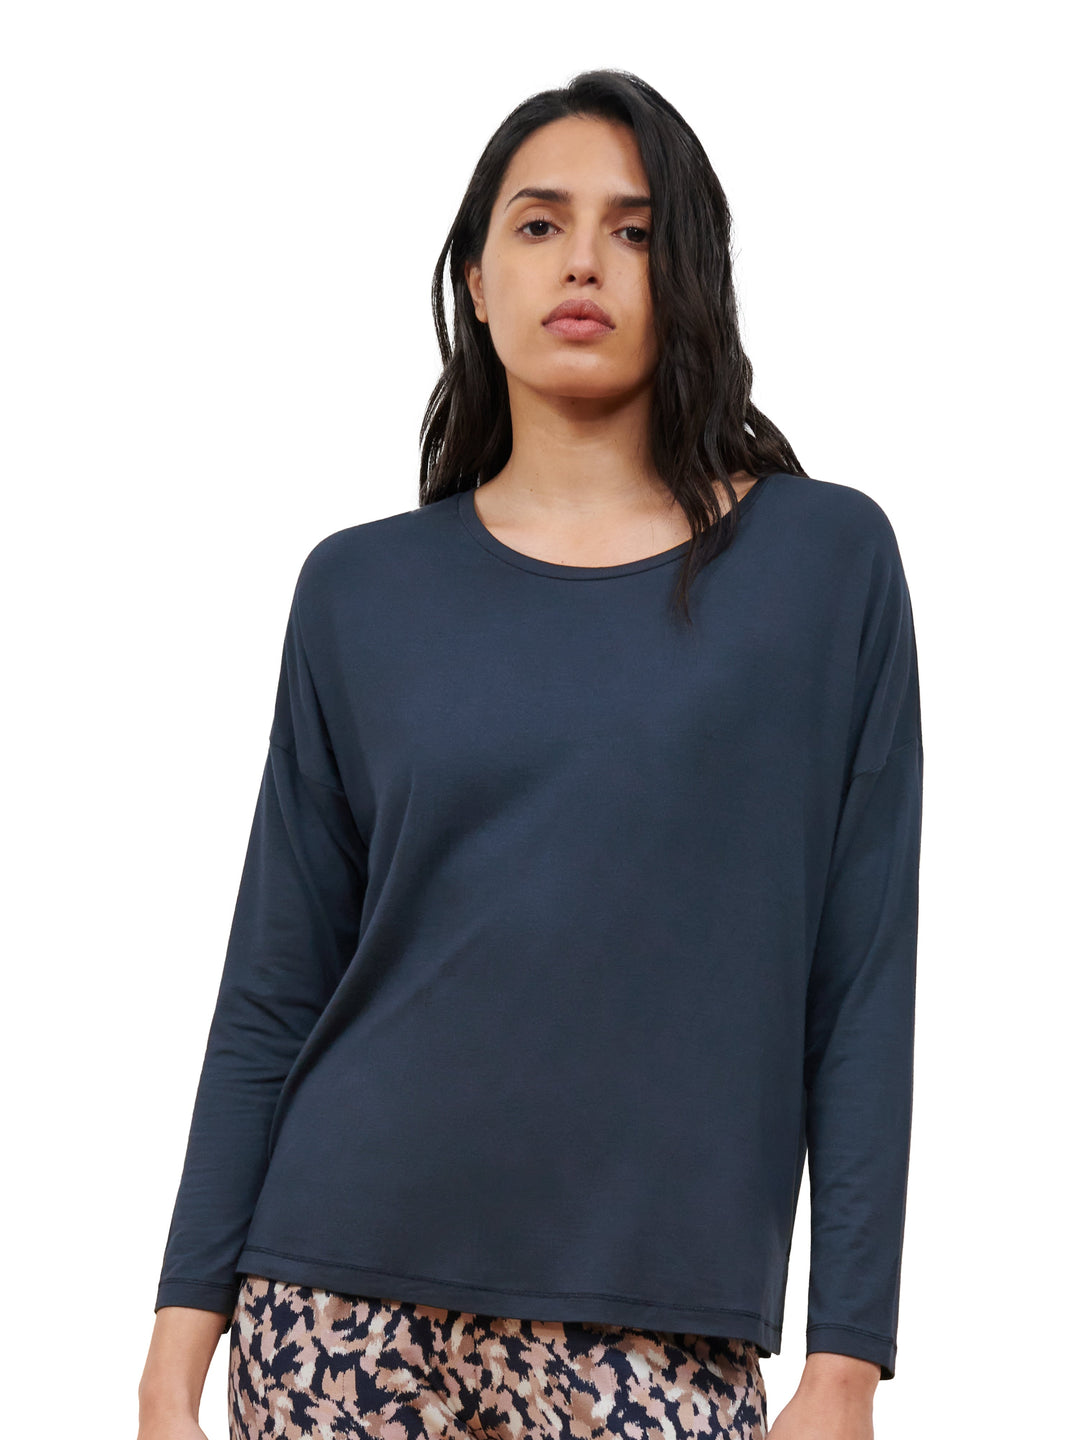 Femilet - Yara Camiseta Ls Top De Pijama Azul Marino Oscuro Femilet